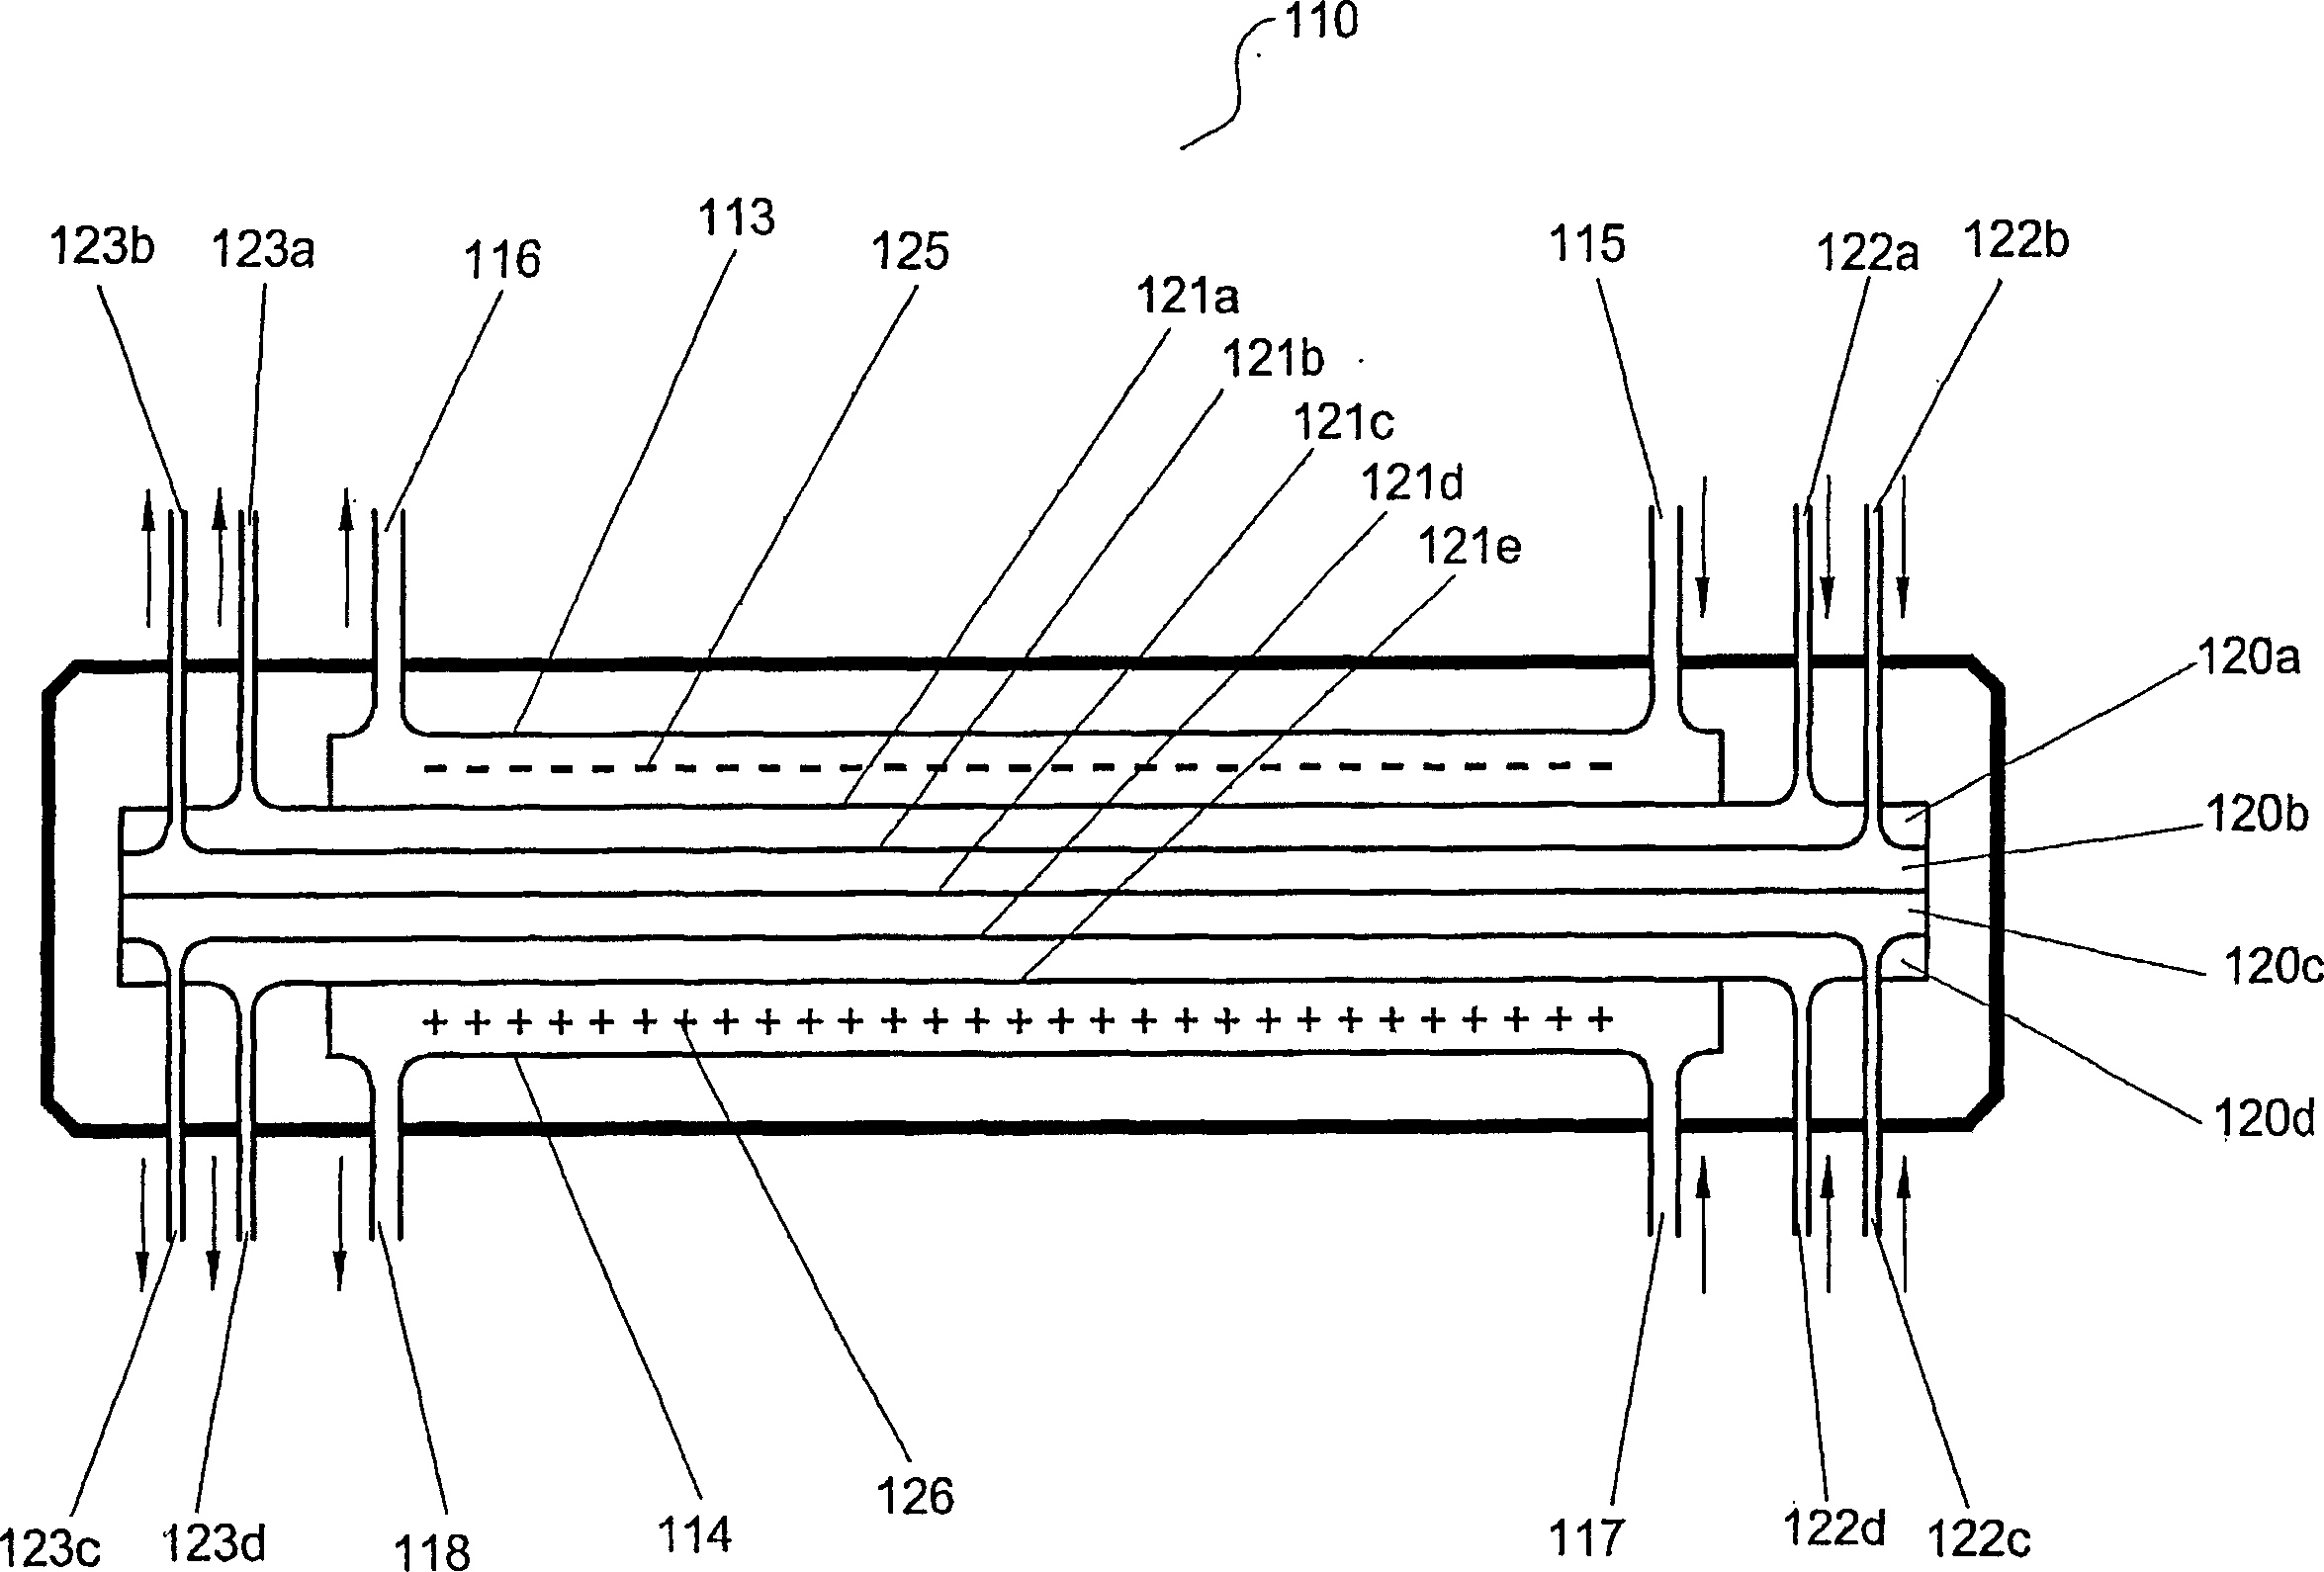 Multi-port separation apparatus and method